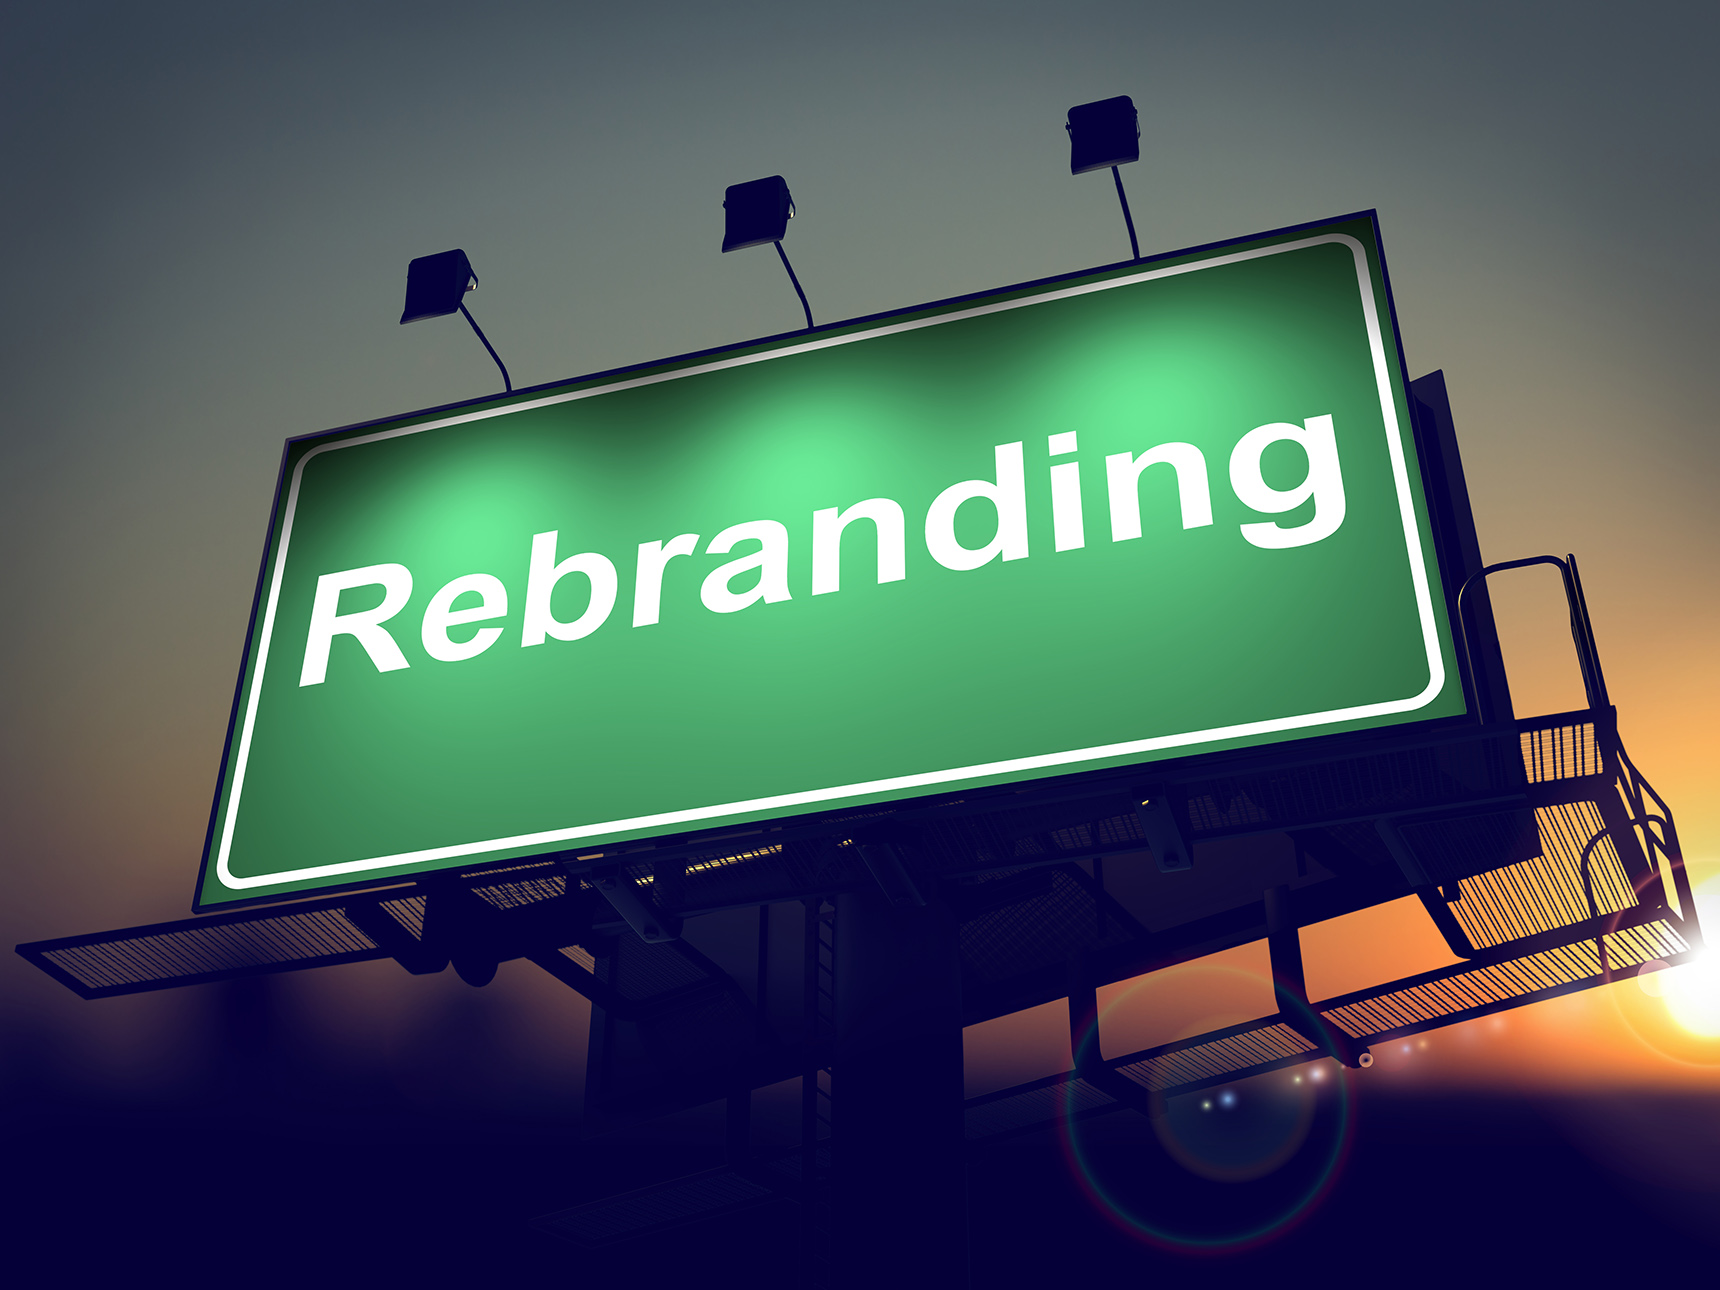 rebrand your company